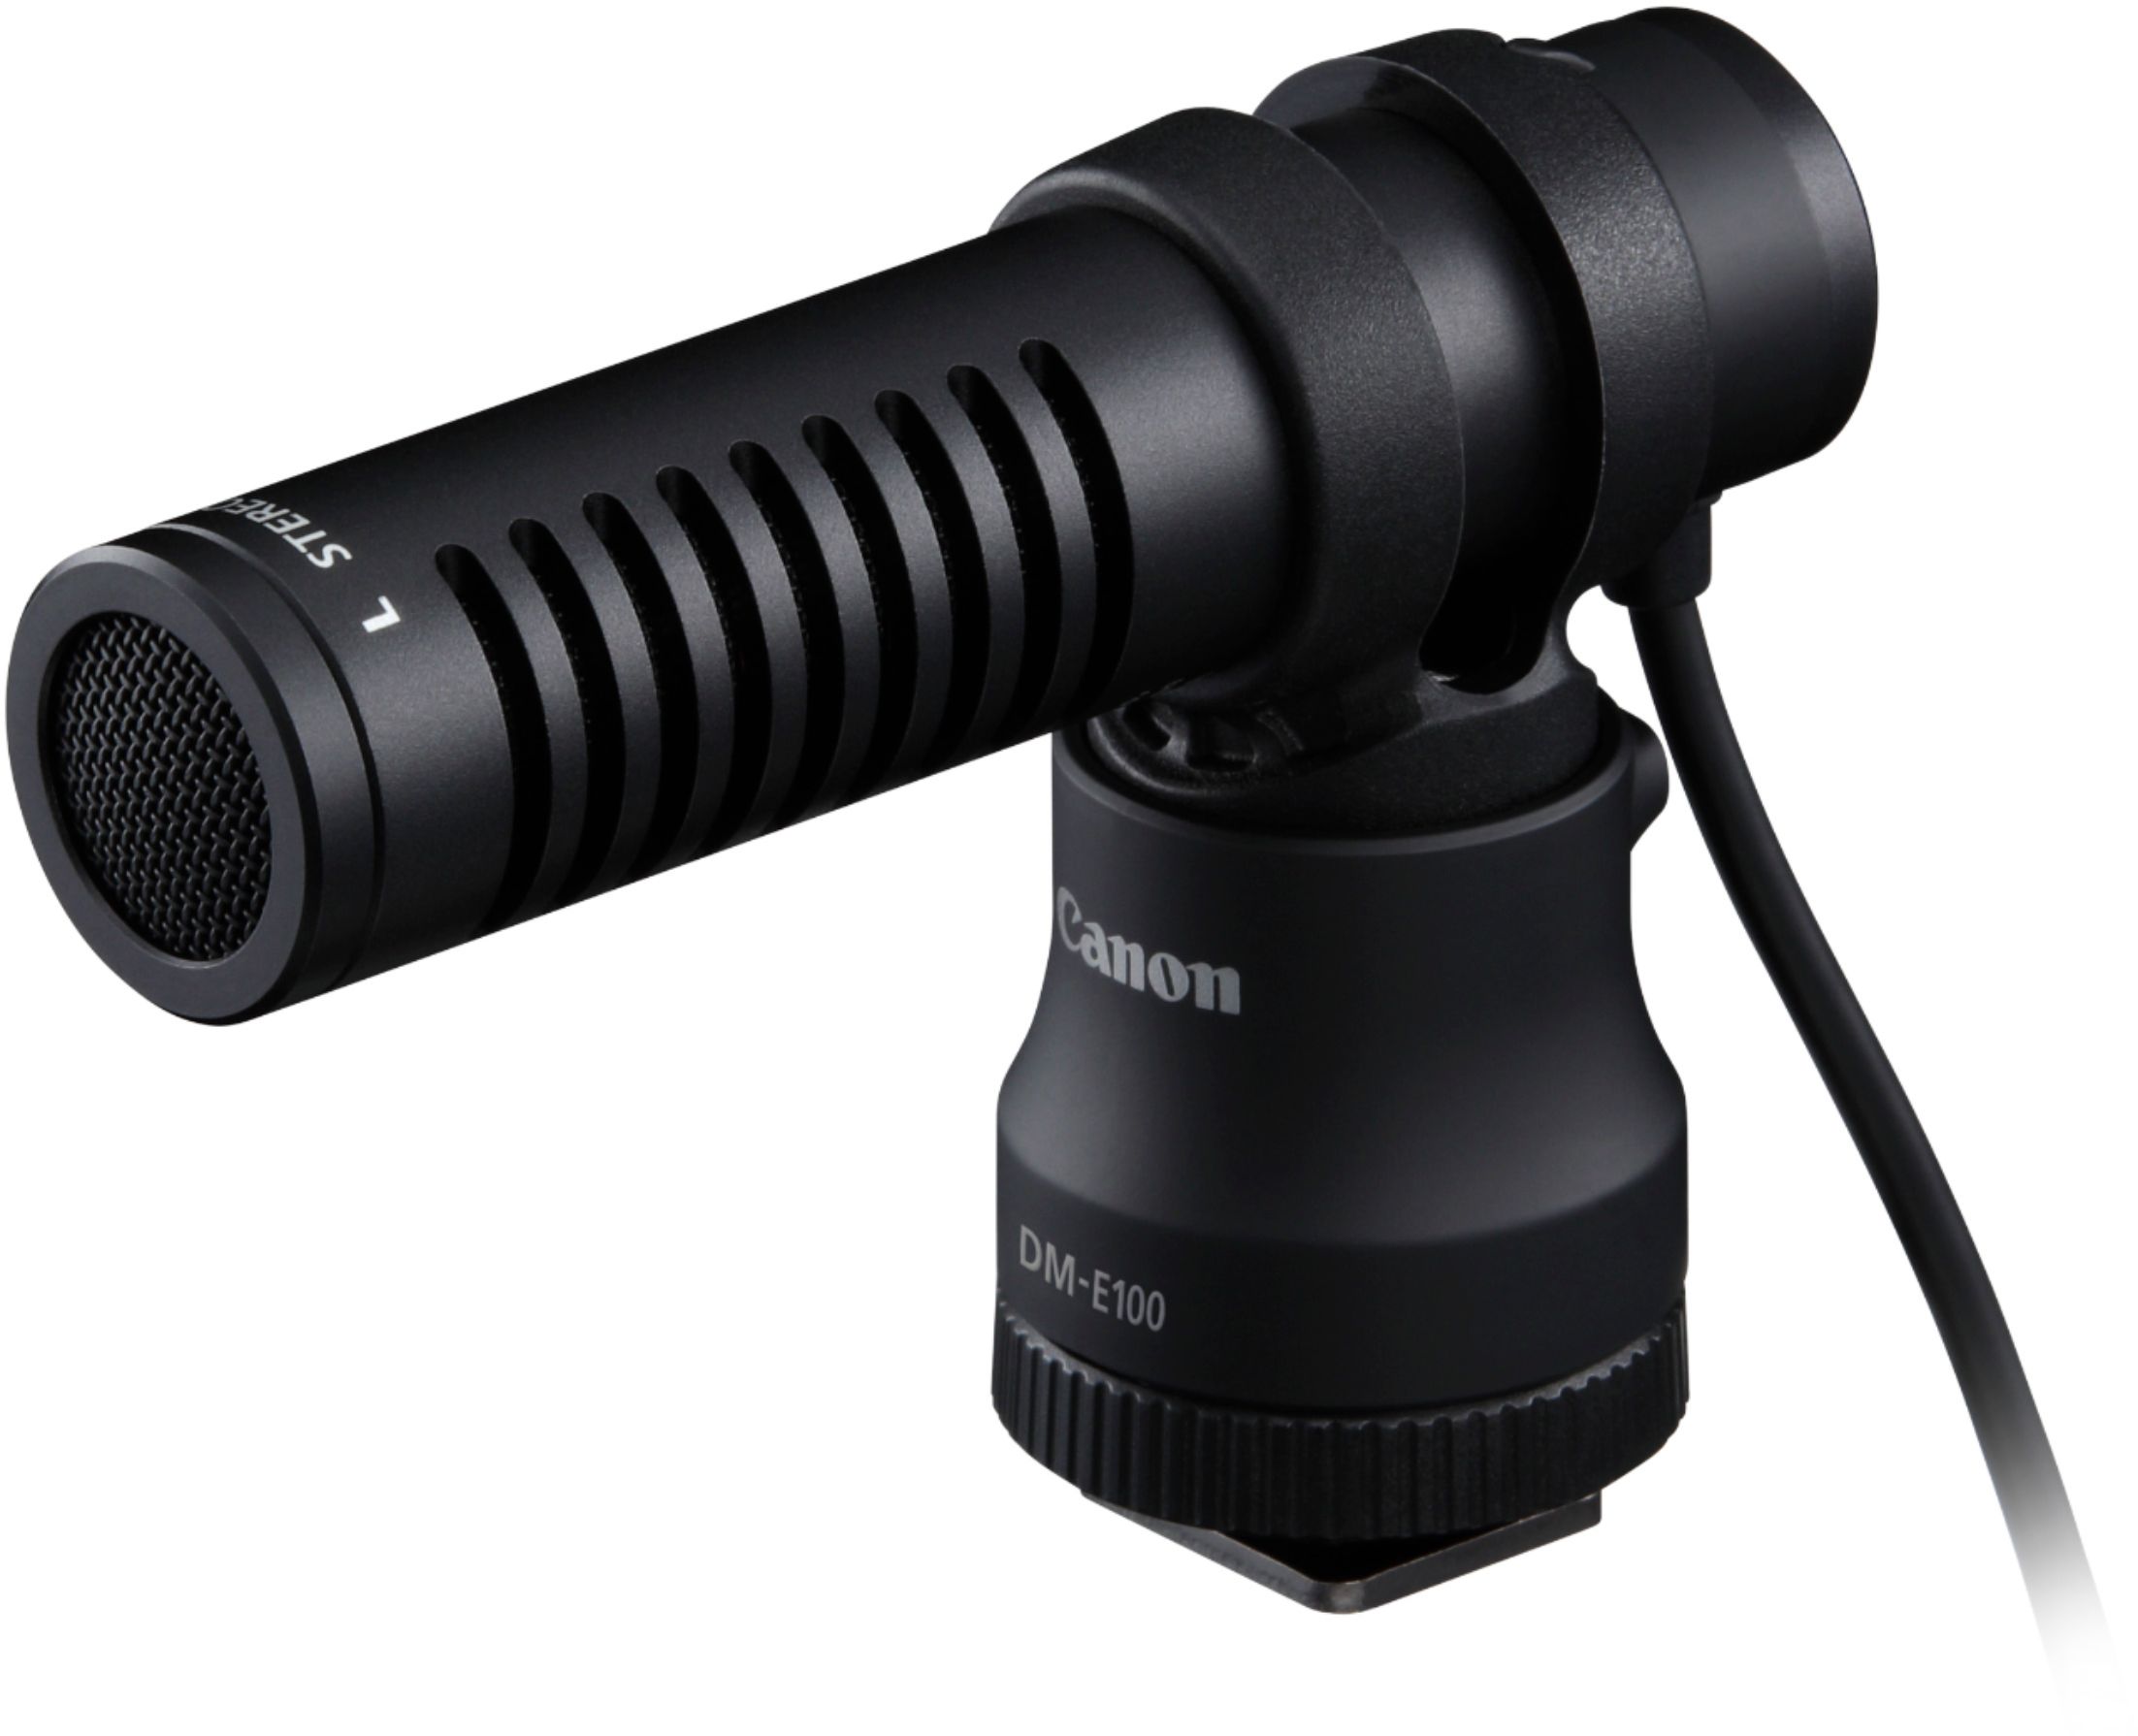 Best Buy: Canon EOS 90D DSLR Camera with EF-S 18-55mm Lens Black 3616C009